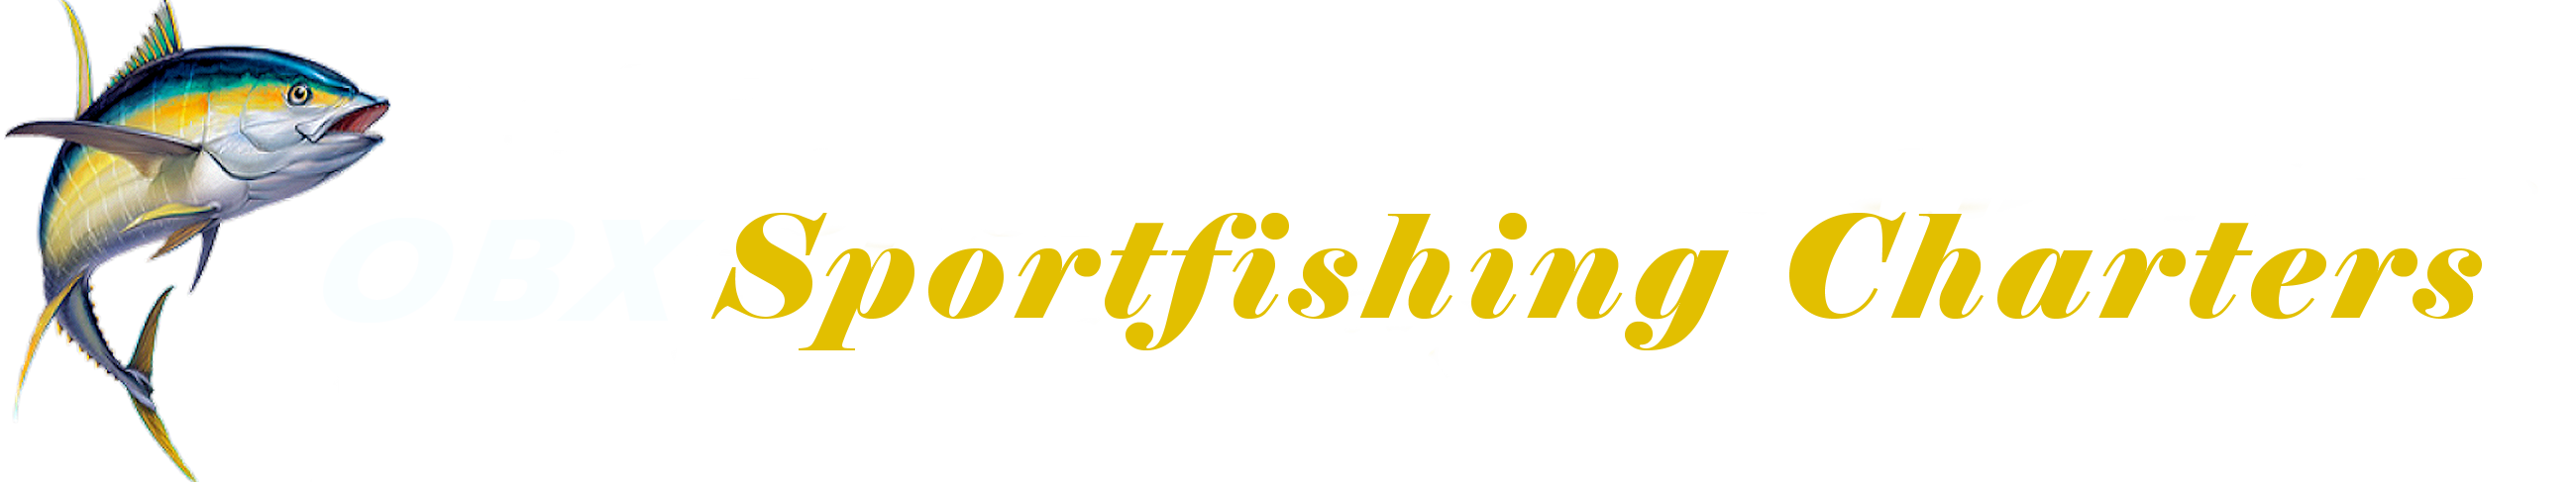 OBX Sportfishing Charter Booking Logo